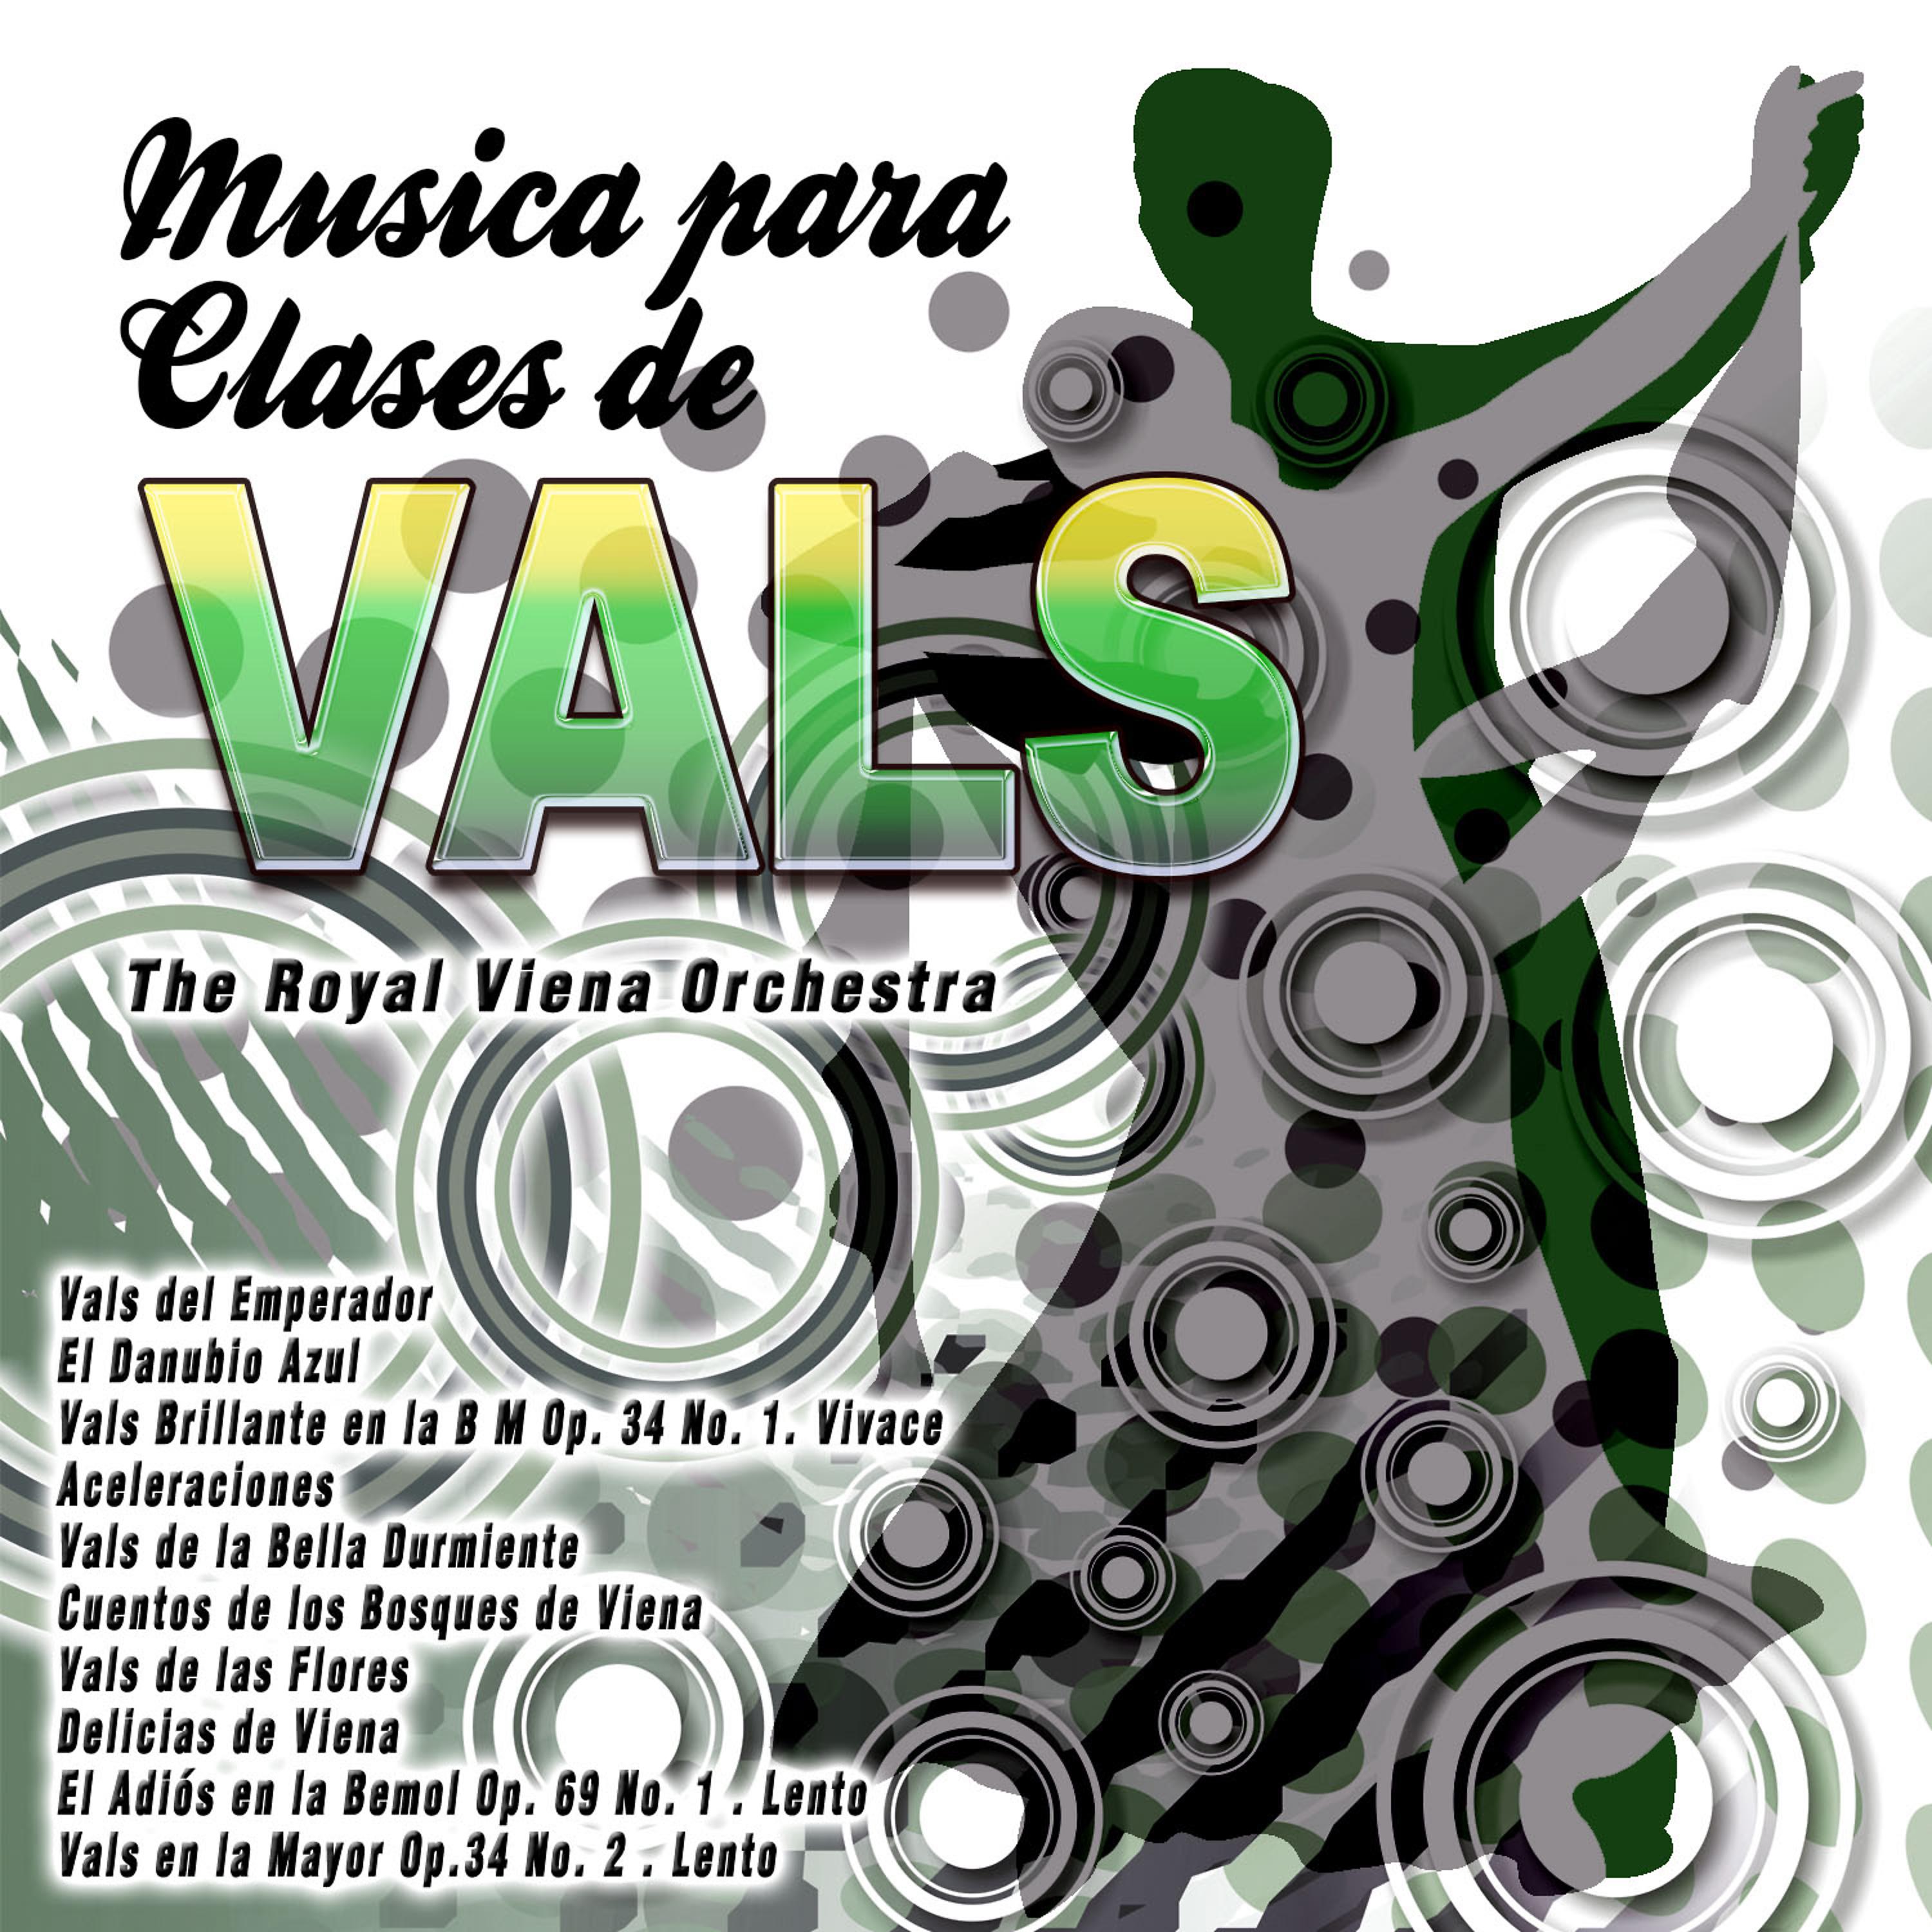 Постер альбома Música para Clases de Vals